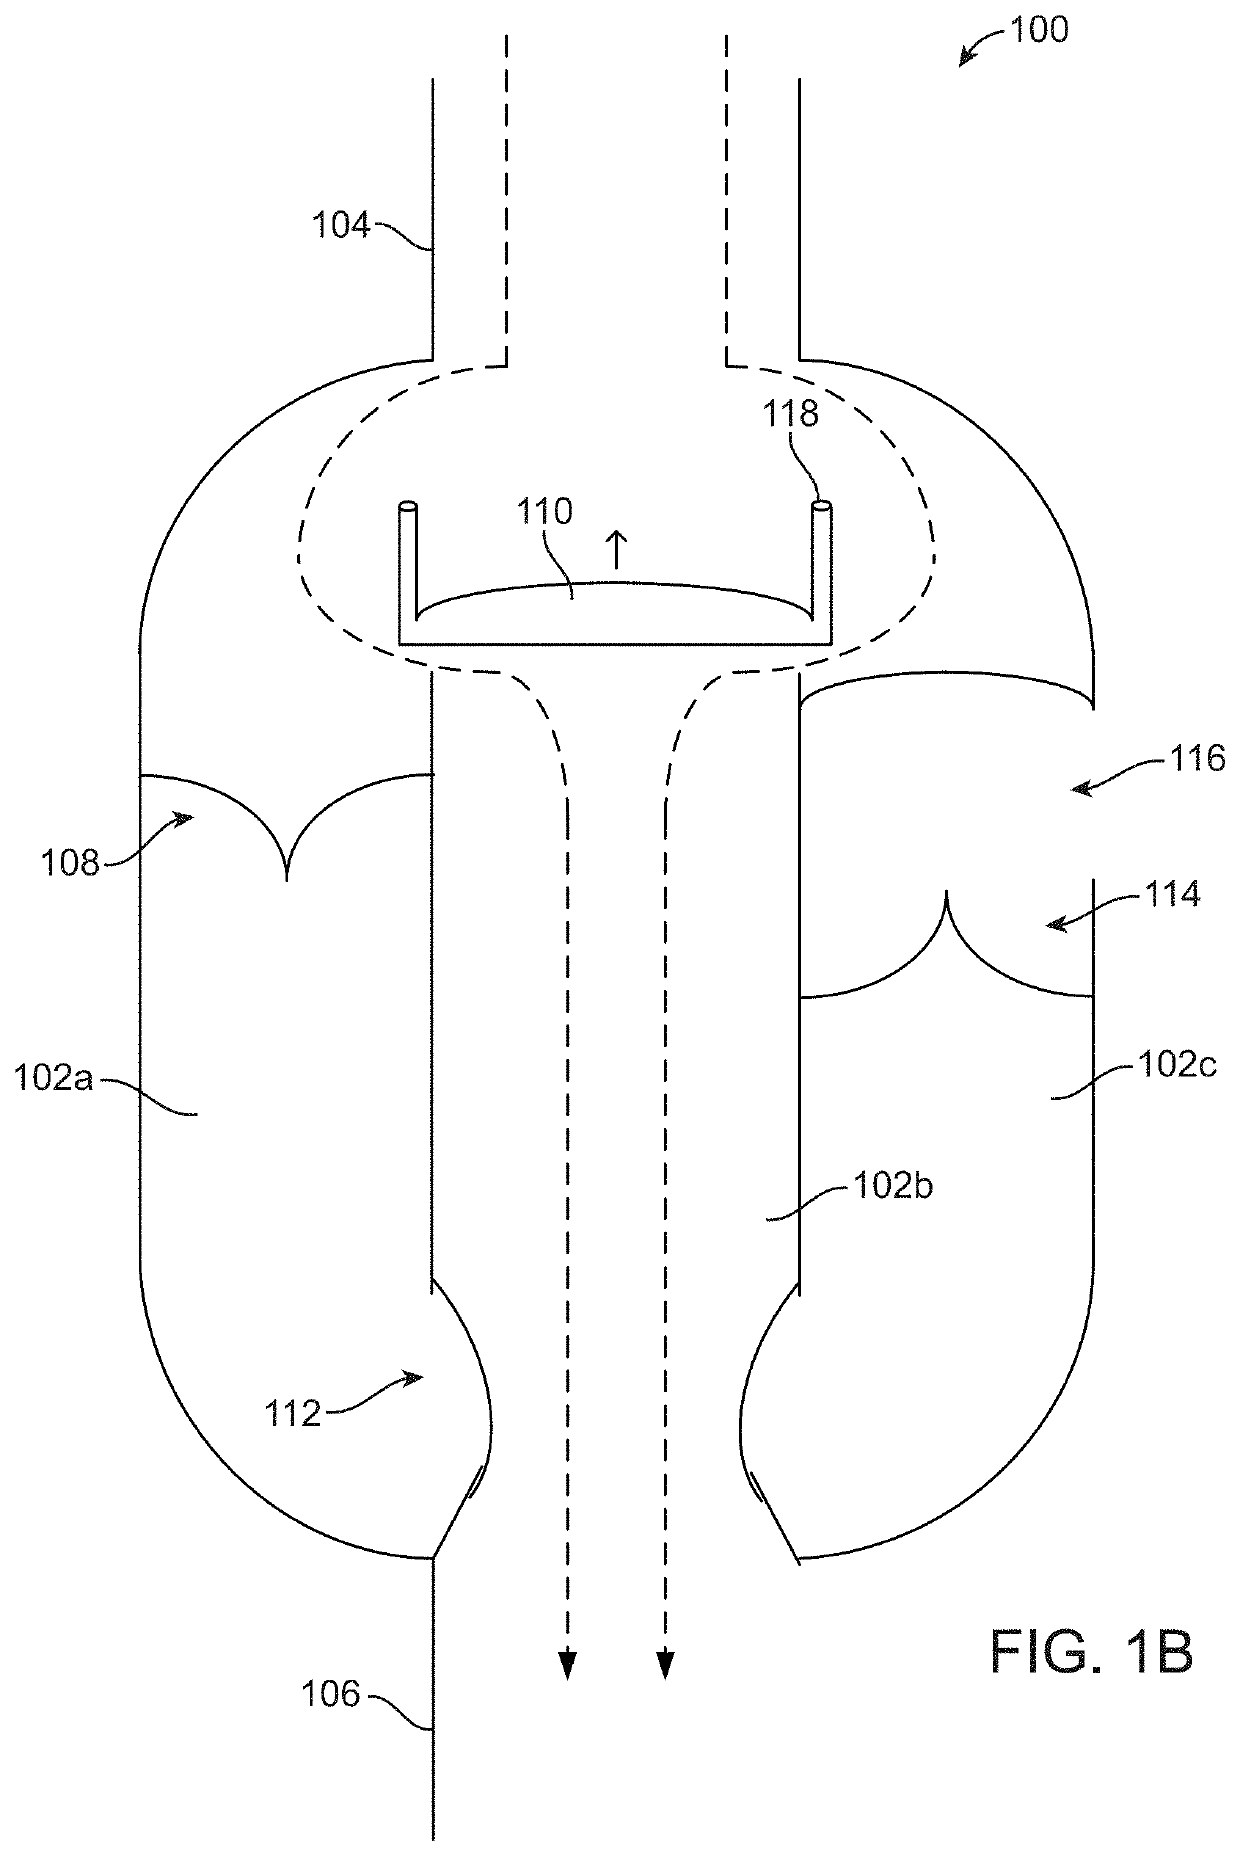 Inspiratory resistor valve system with expiratory port